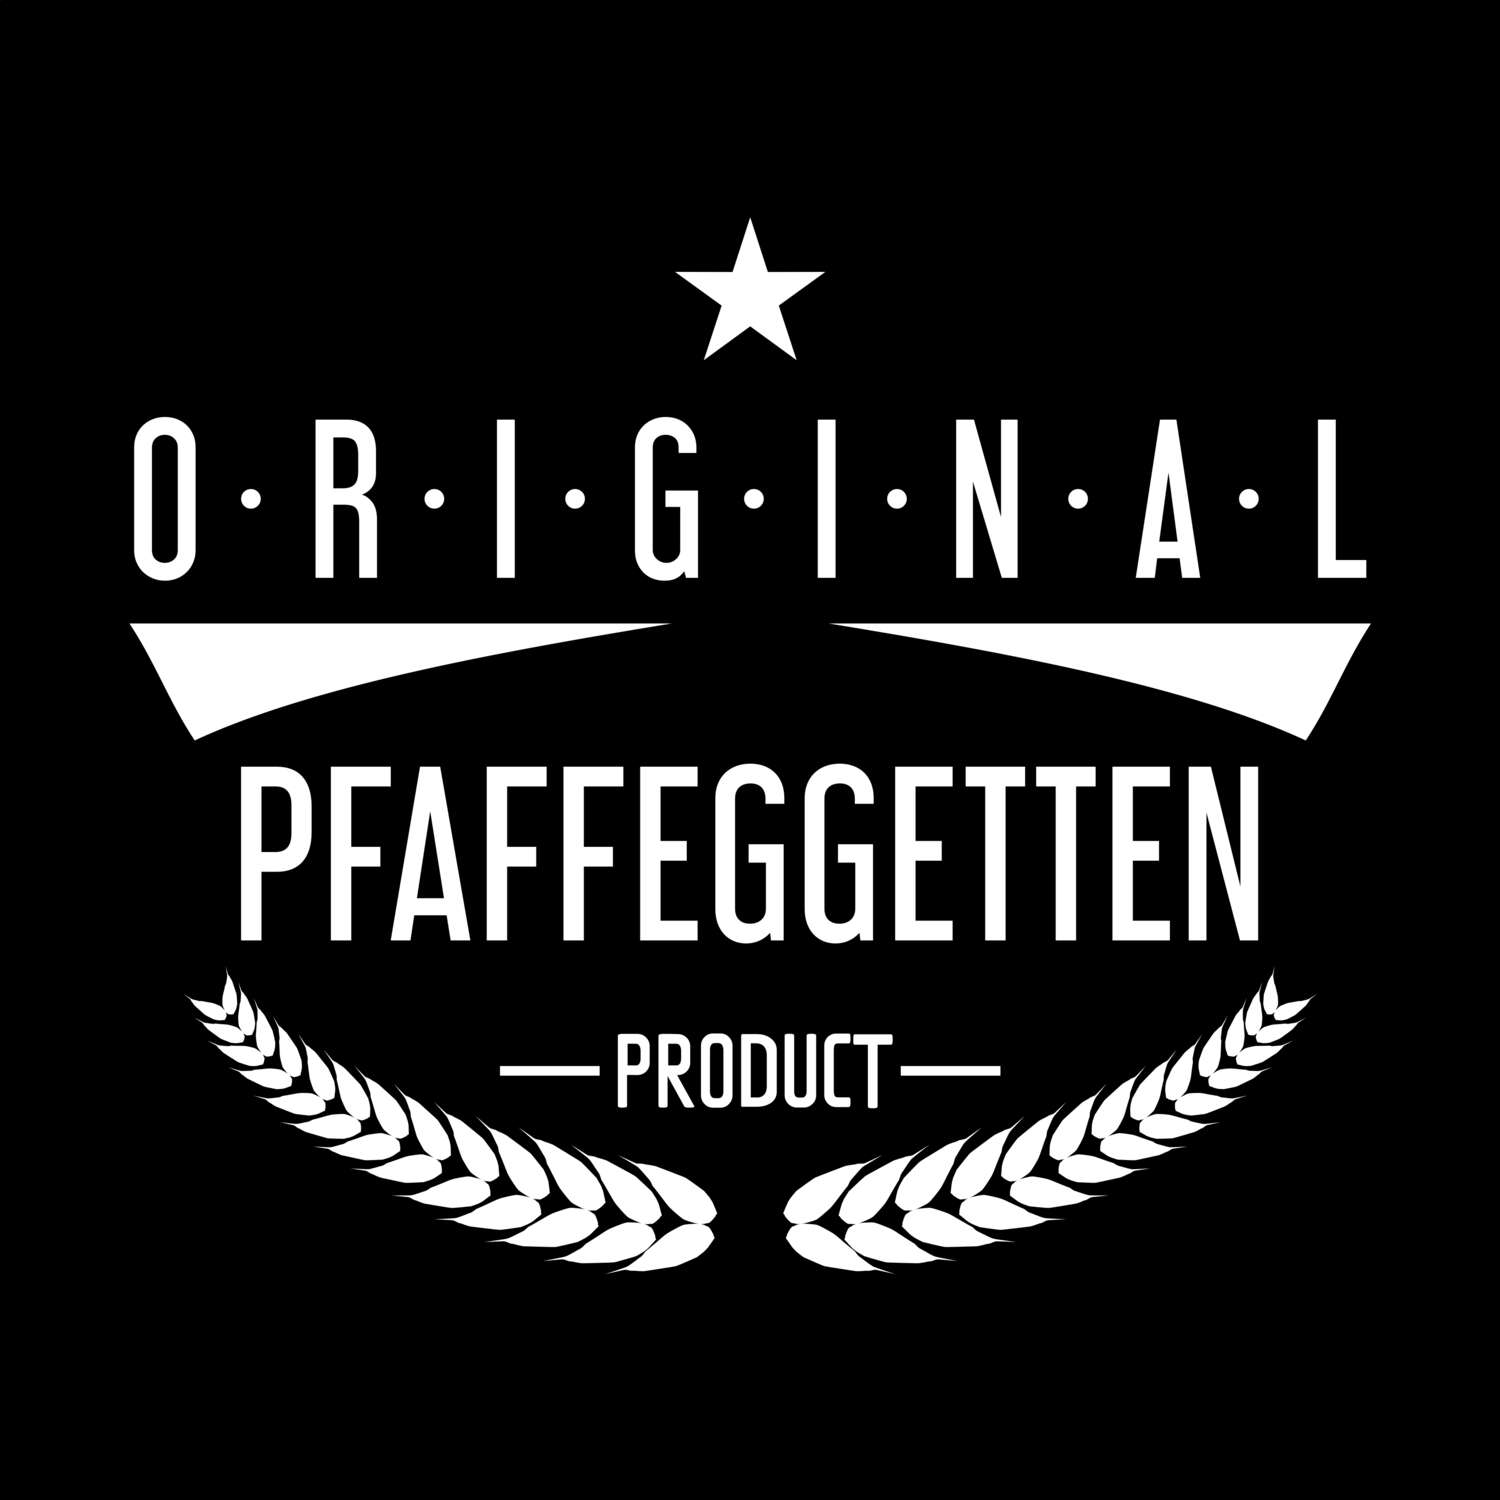 Pfaffeggetten T-Shirt »Original Product«